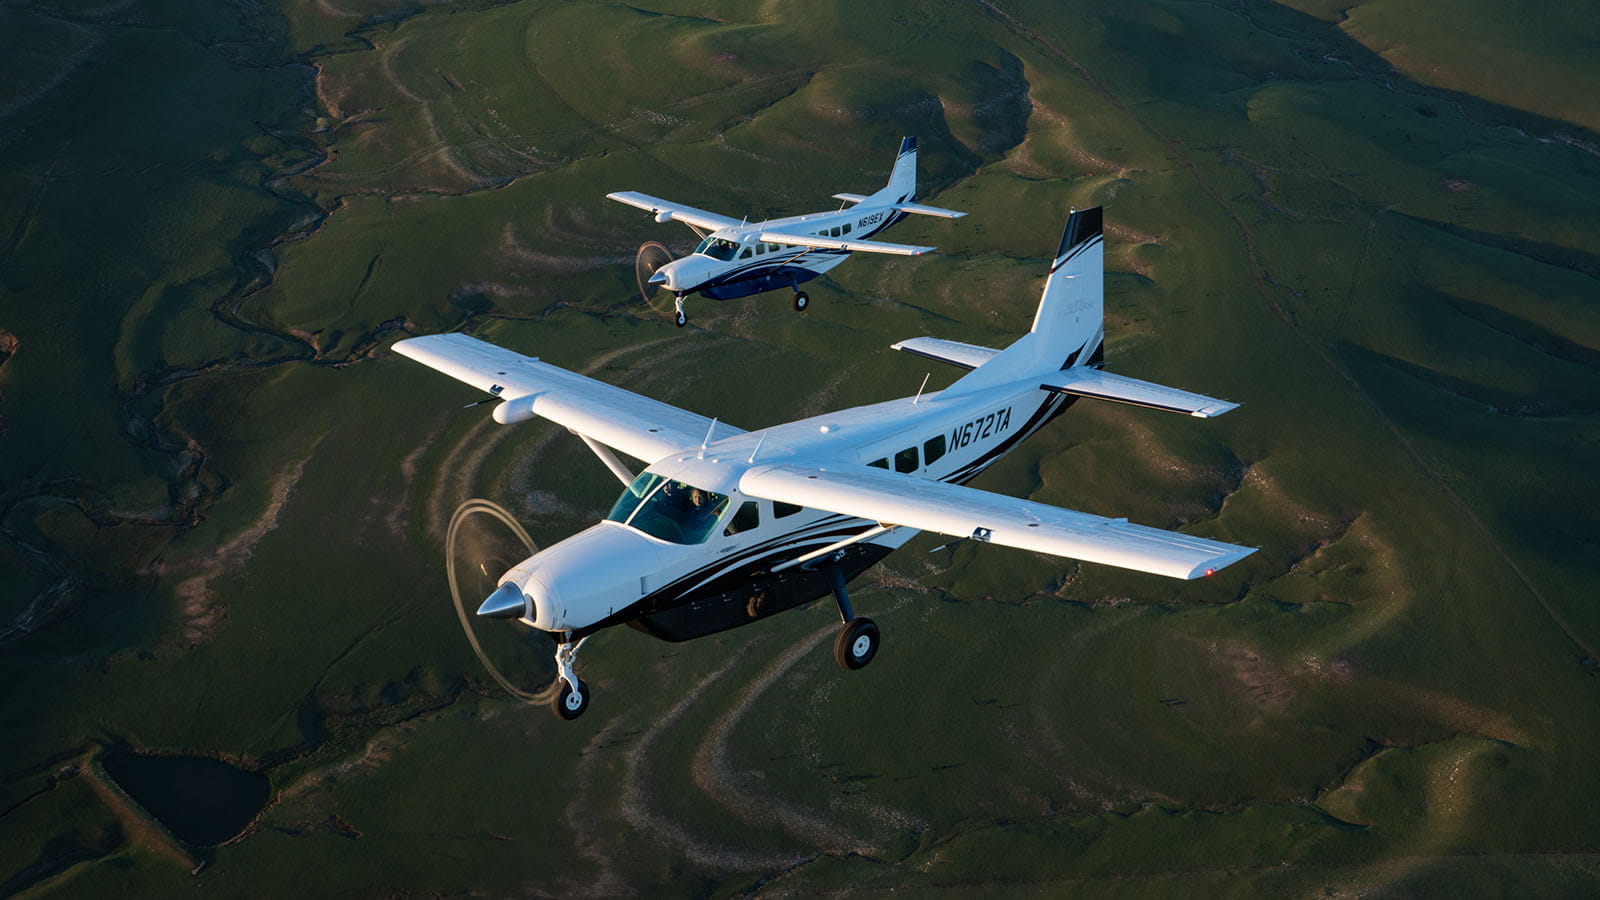 The Textron Aviation Cessna Caravan, powered by the Pratt & Whitney Canada PT6 engine